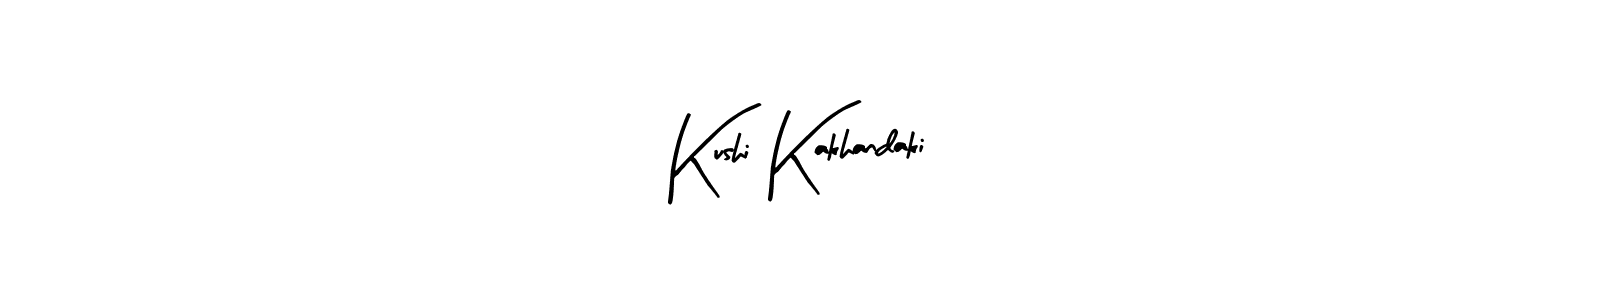 How to Draw Kushi Kakhandaki signature style? Arty Signature is a latest design signature styles for name Kushi Kakhandaki. Kushi Kakhandaki signature style 8 images and pictures png